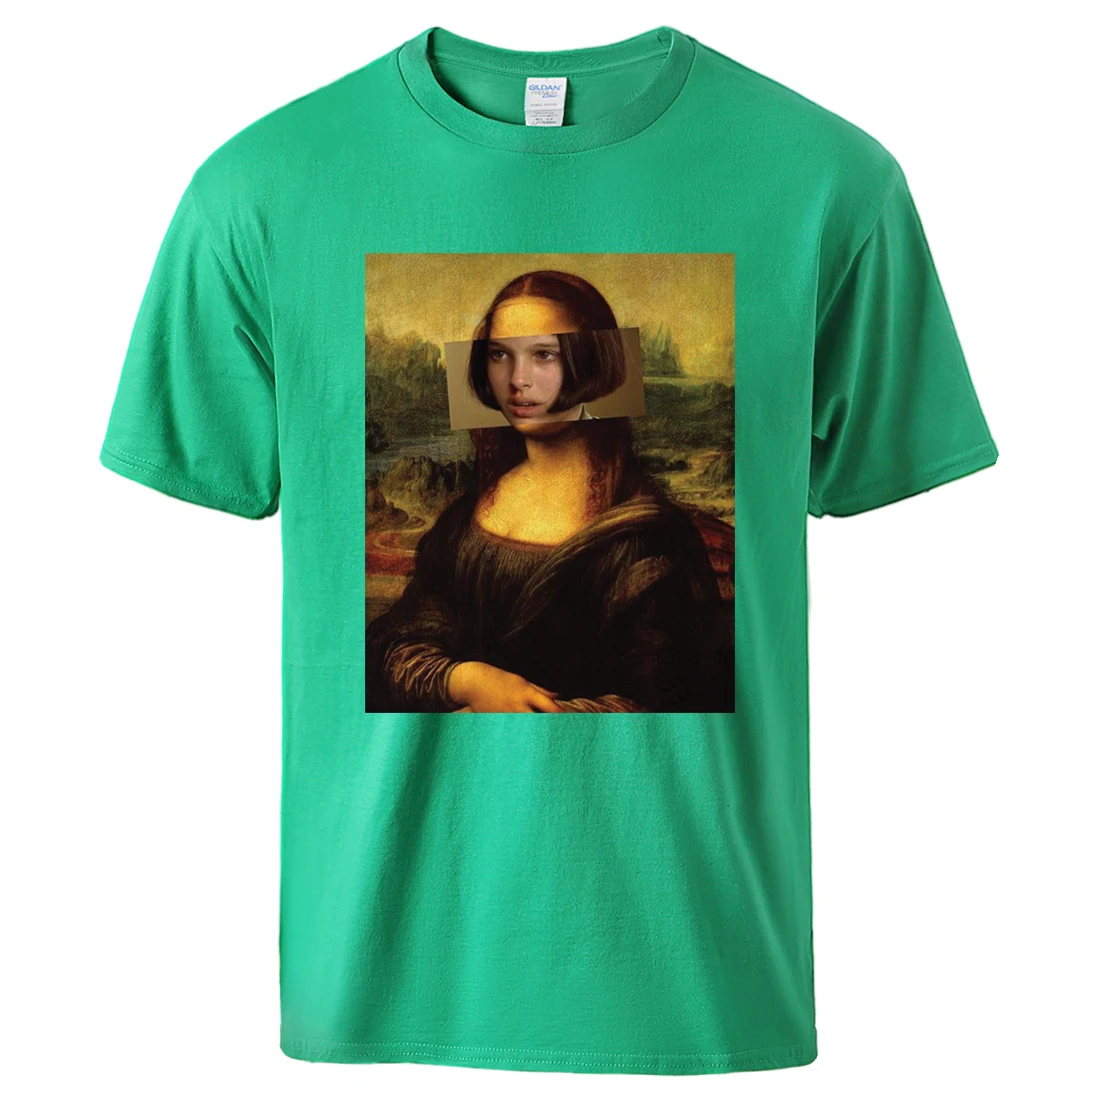 

Mona Lisa Pulp Fiction Tshirt Man Causal Short Sleeve Tops Tees Tshirt 2022 Summer 100% Cotton Male Tee Vintage Movie Print Top